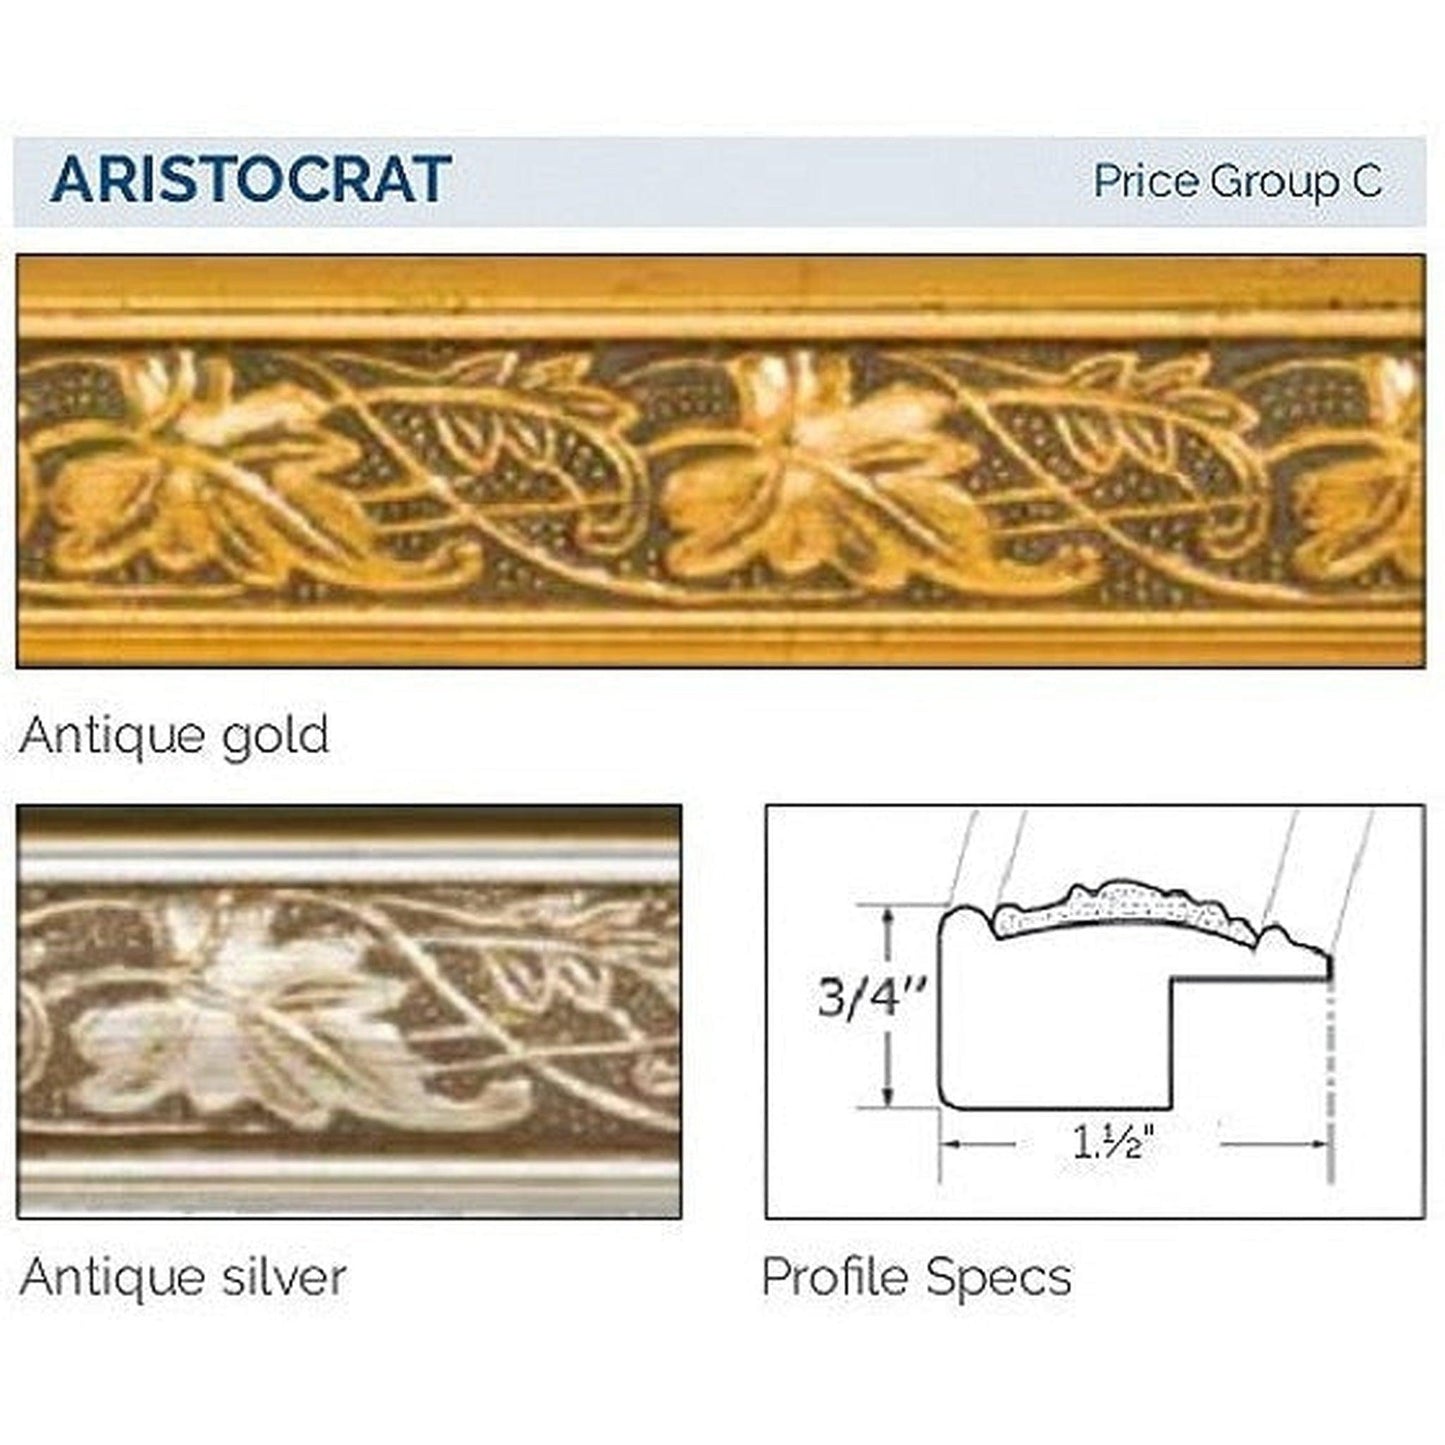 Afina Signature 24" x 30" Aristocrat Antique Silver Recessed Reversible Hinged Single Door Medicine Cabinet With Beveled Edge Mirror